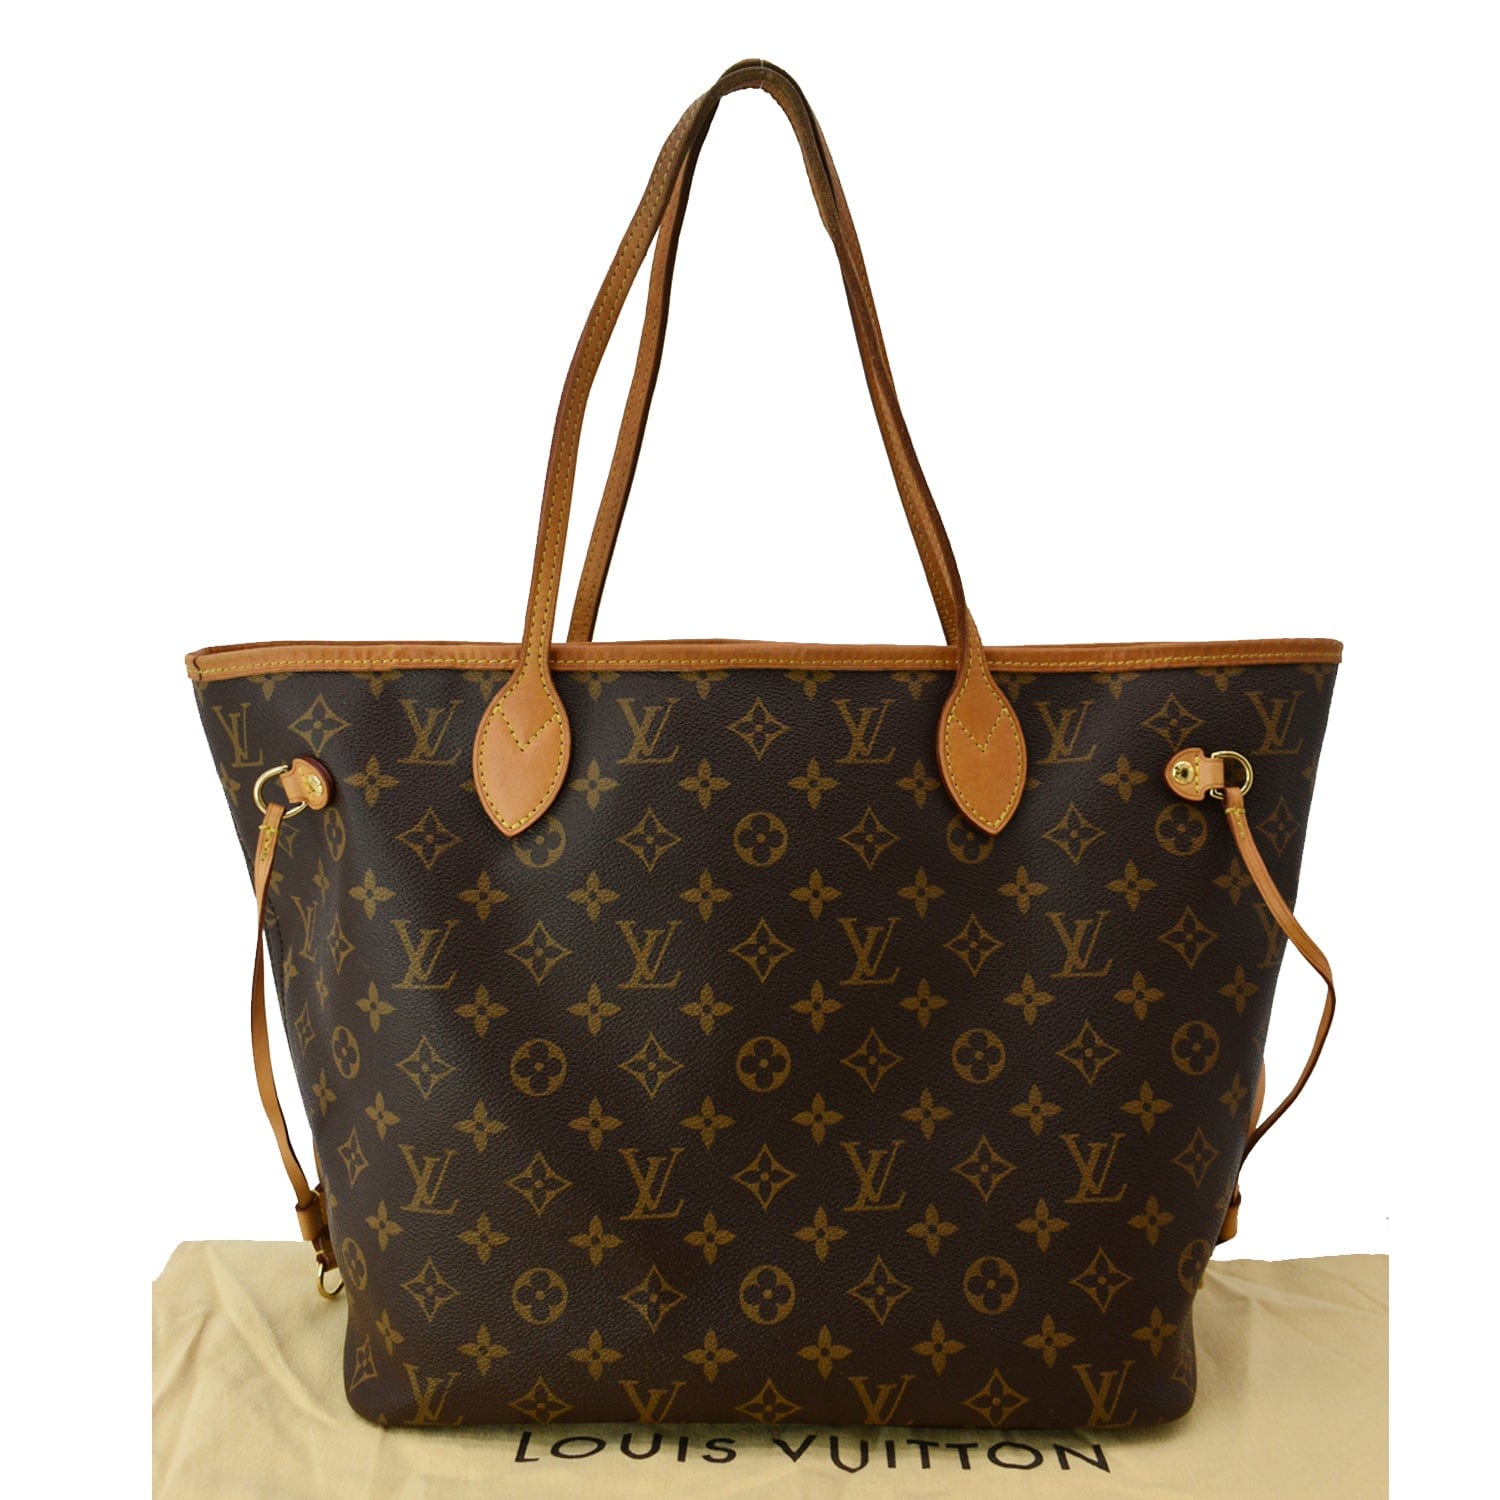 Louis Vuitton Neverfull Tote Medium Bags & Handbags for Women for